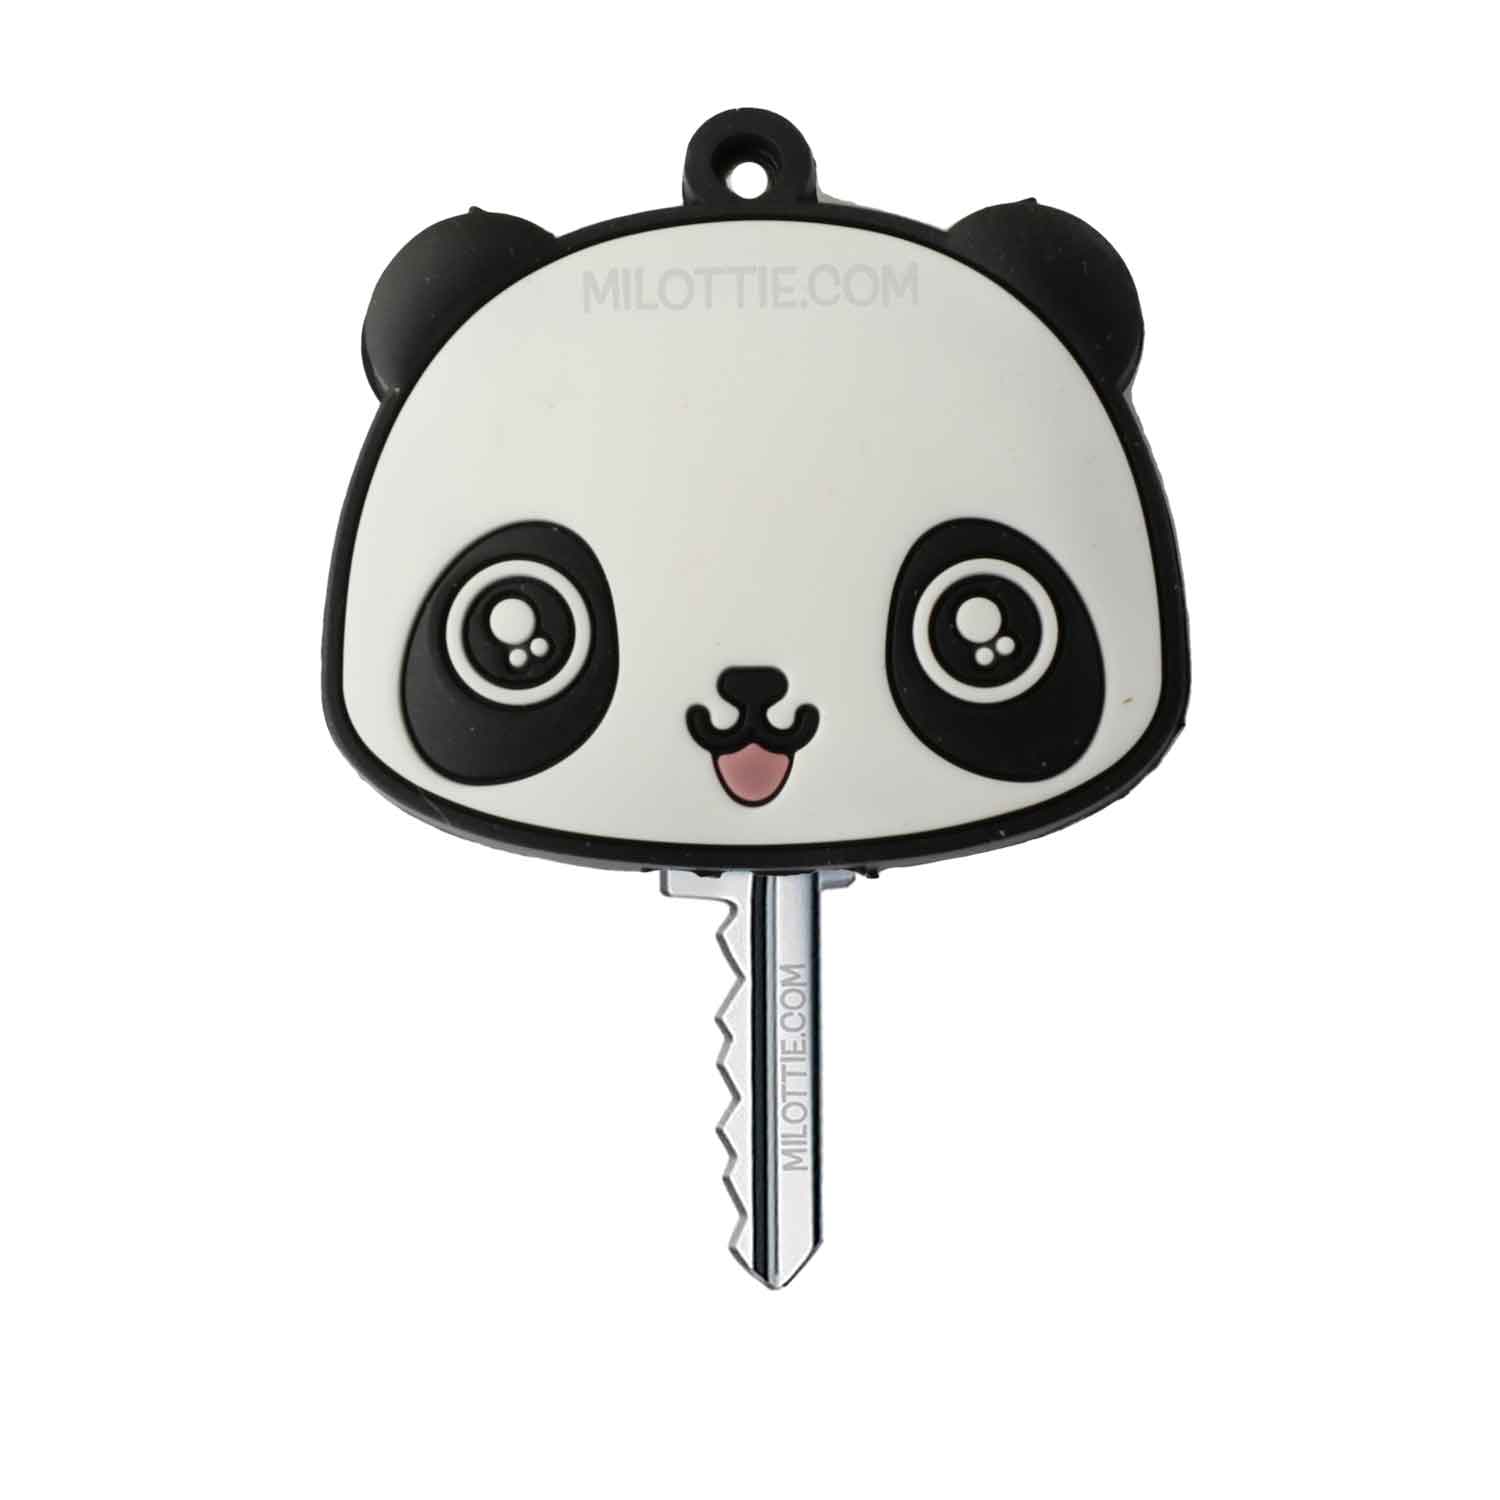 Panda key cover - Milottie